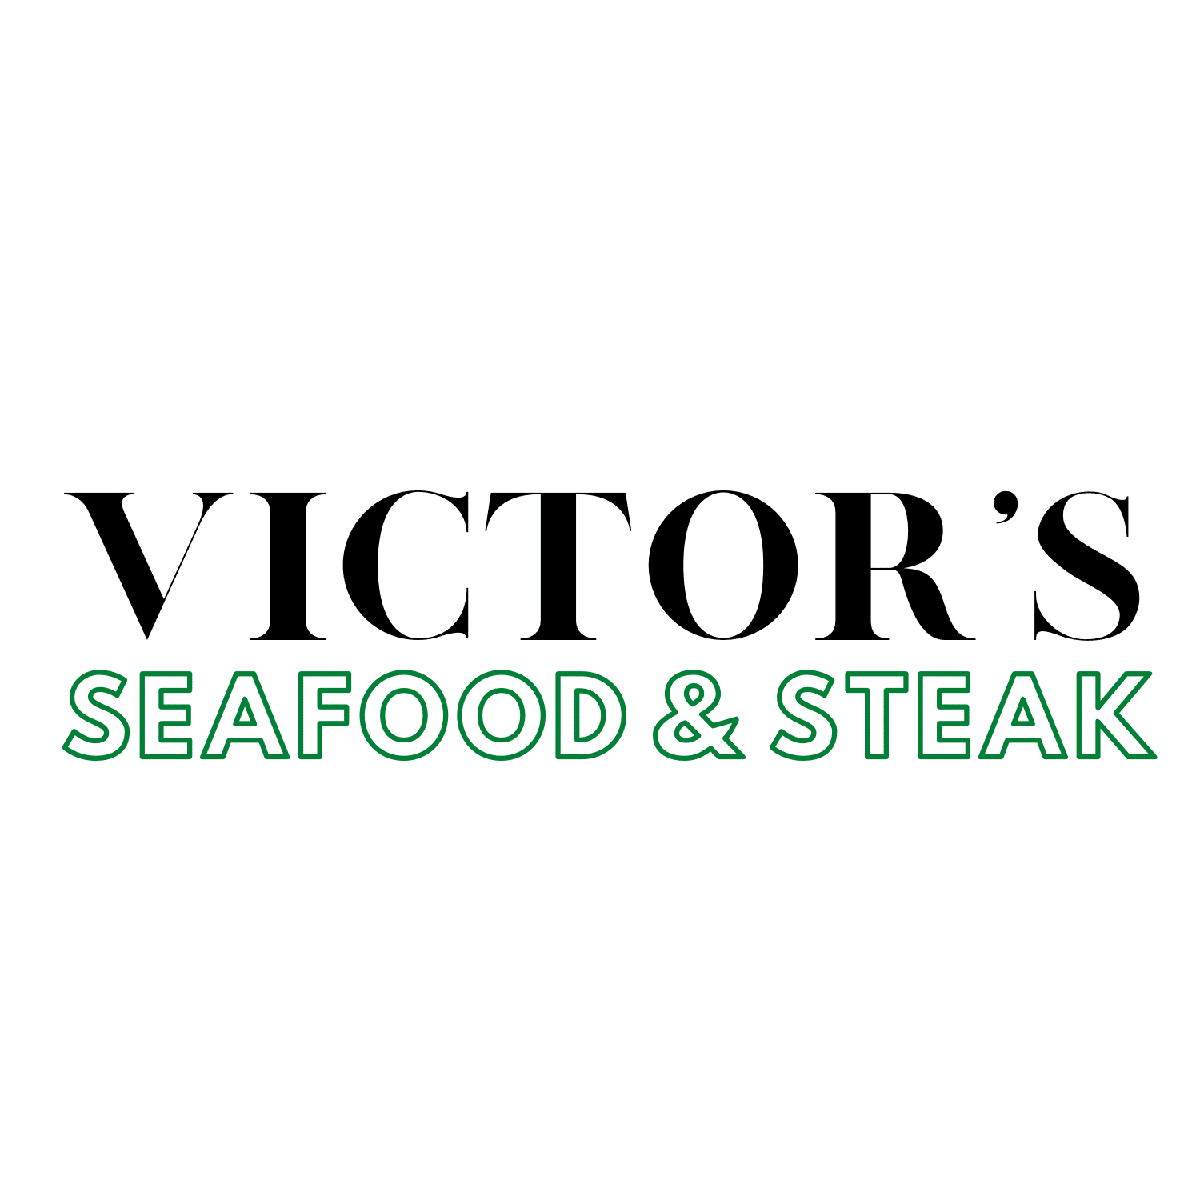 Victor's Seafood & Steak - Holy City Hospitality